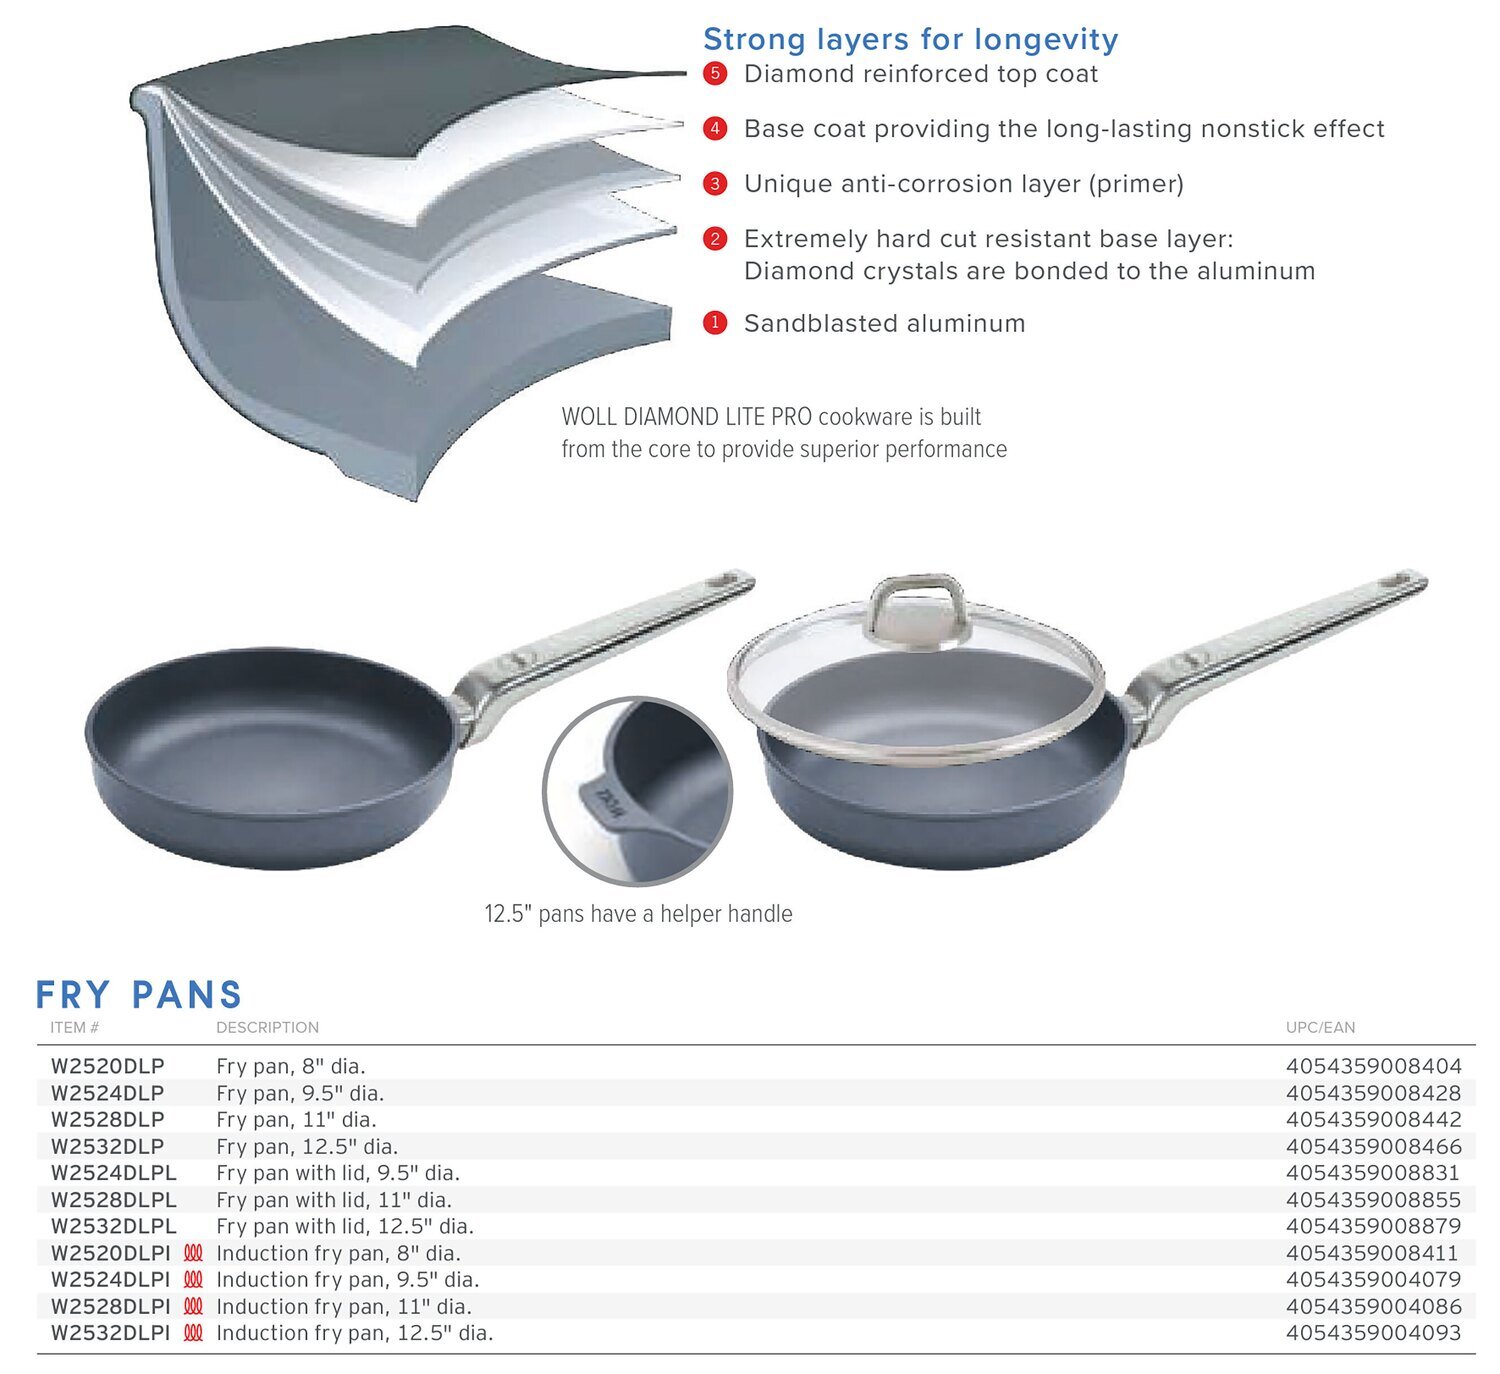 Frieling Diamond Lite Fry Pan with Lid 12.5" W532DPSL